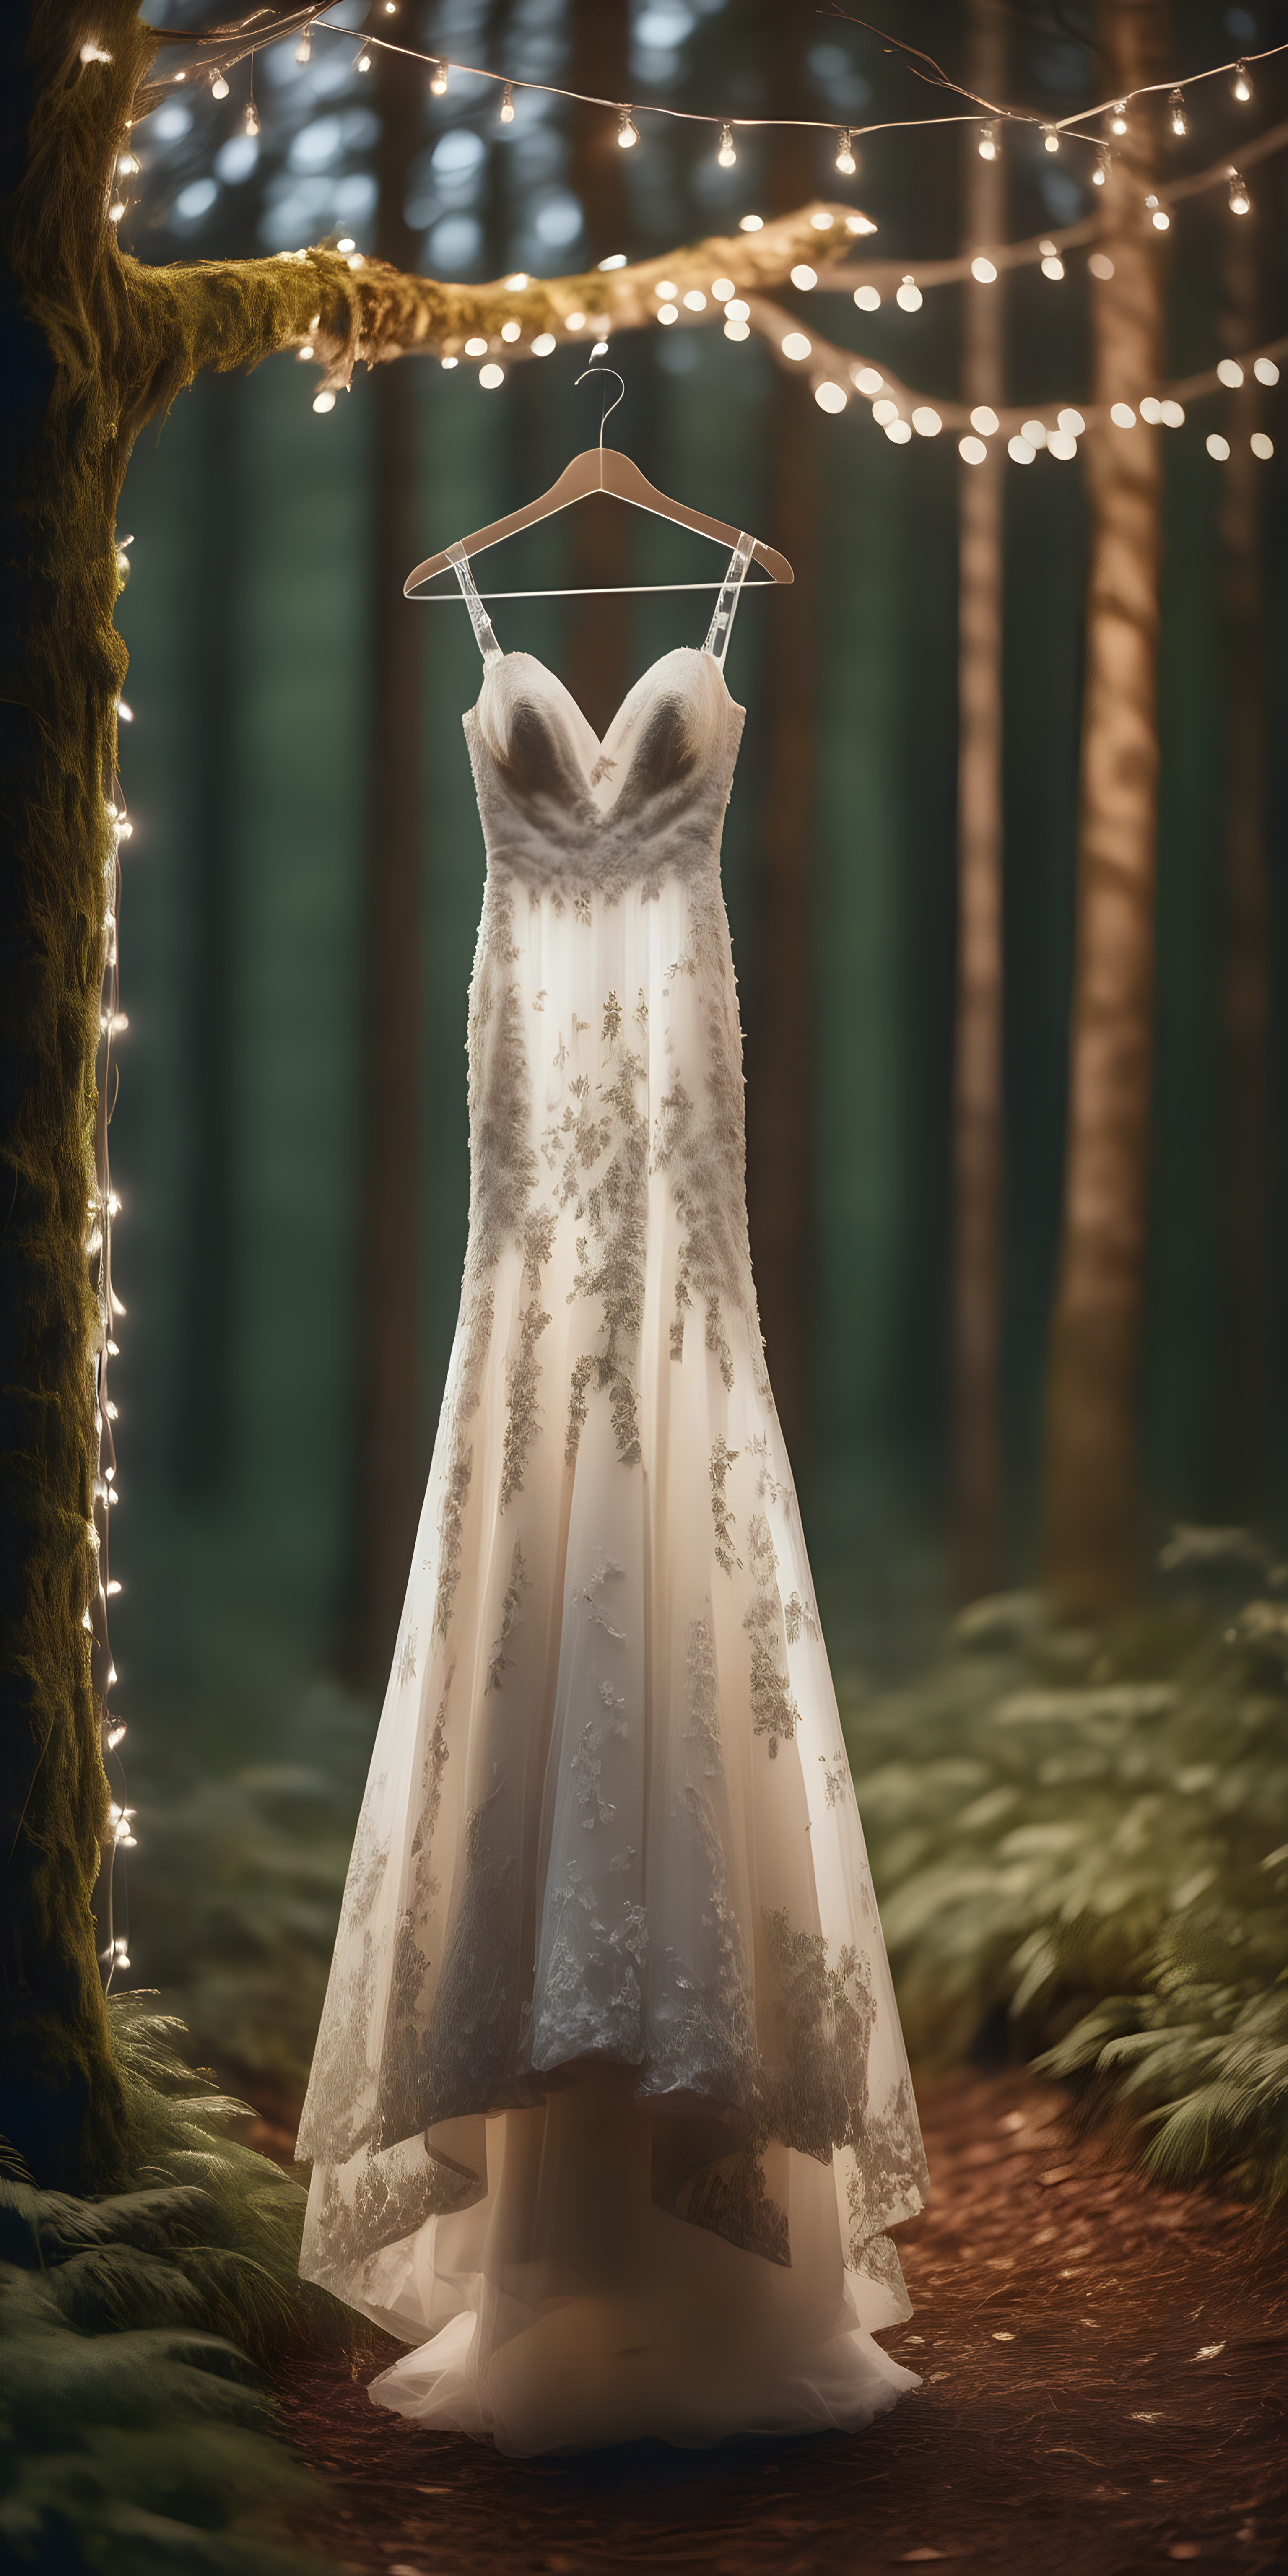 Gorgeous wedding dress on a clothes hanger hung